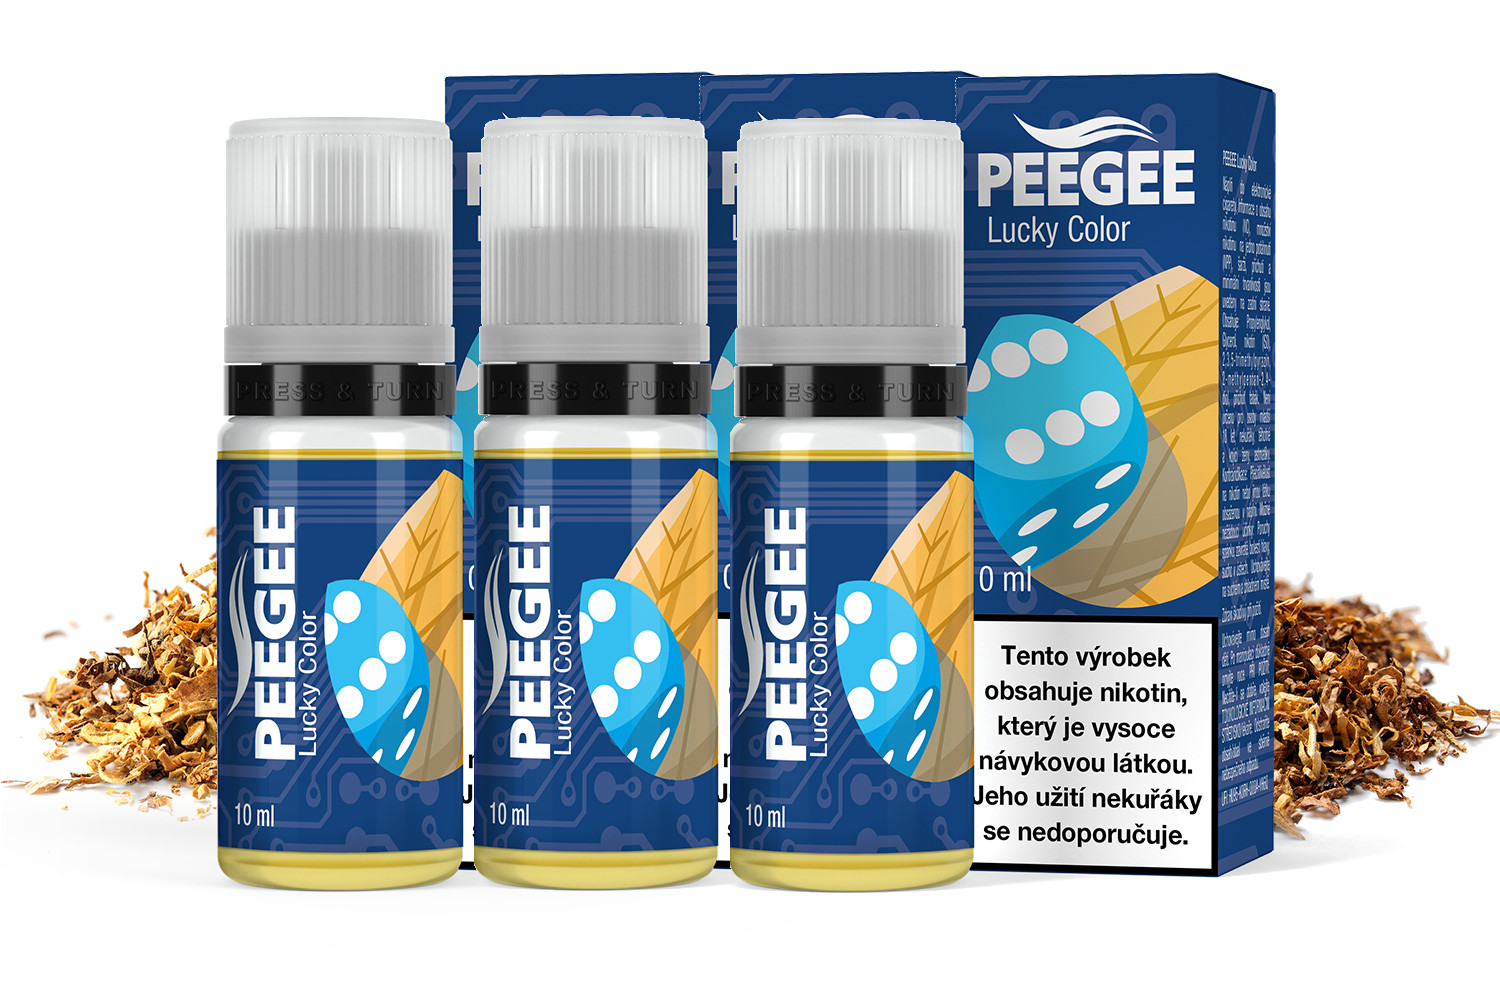 PEEGEE - Lucky Color 3x10ml Obsah nikotinu: 18mg